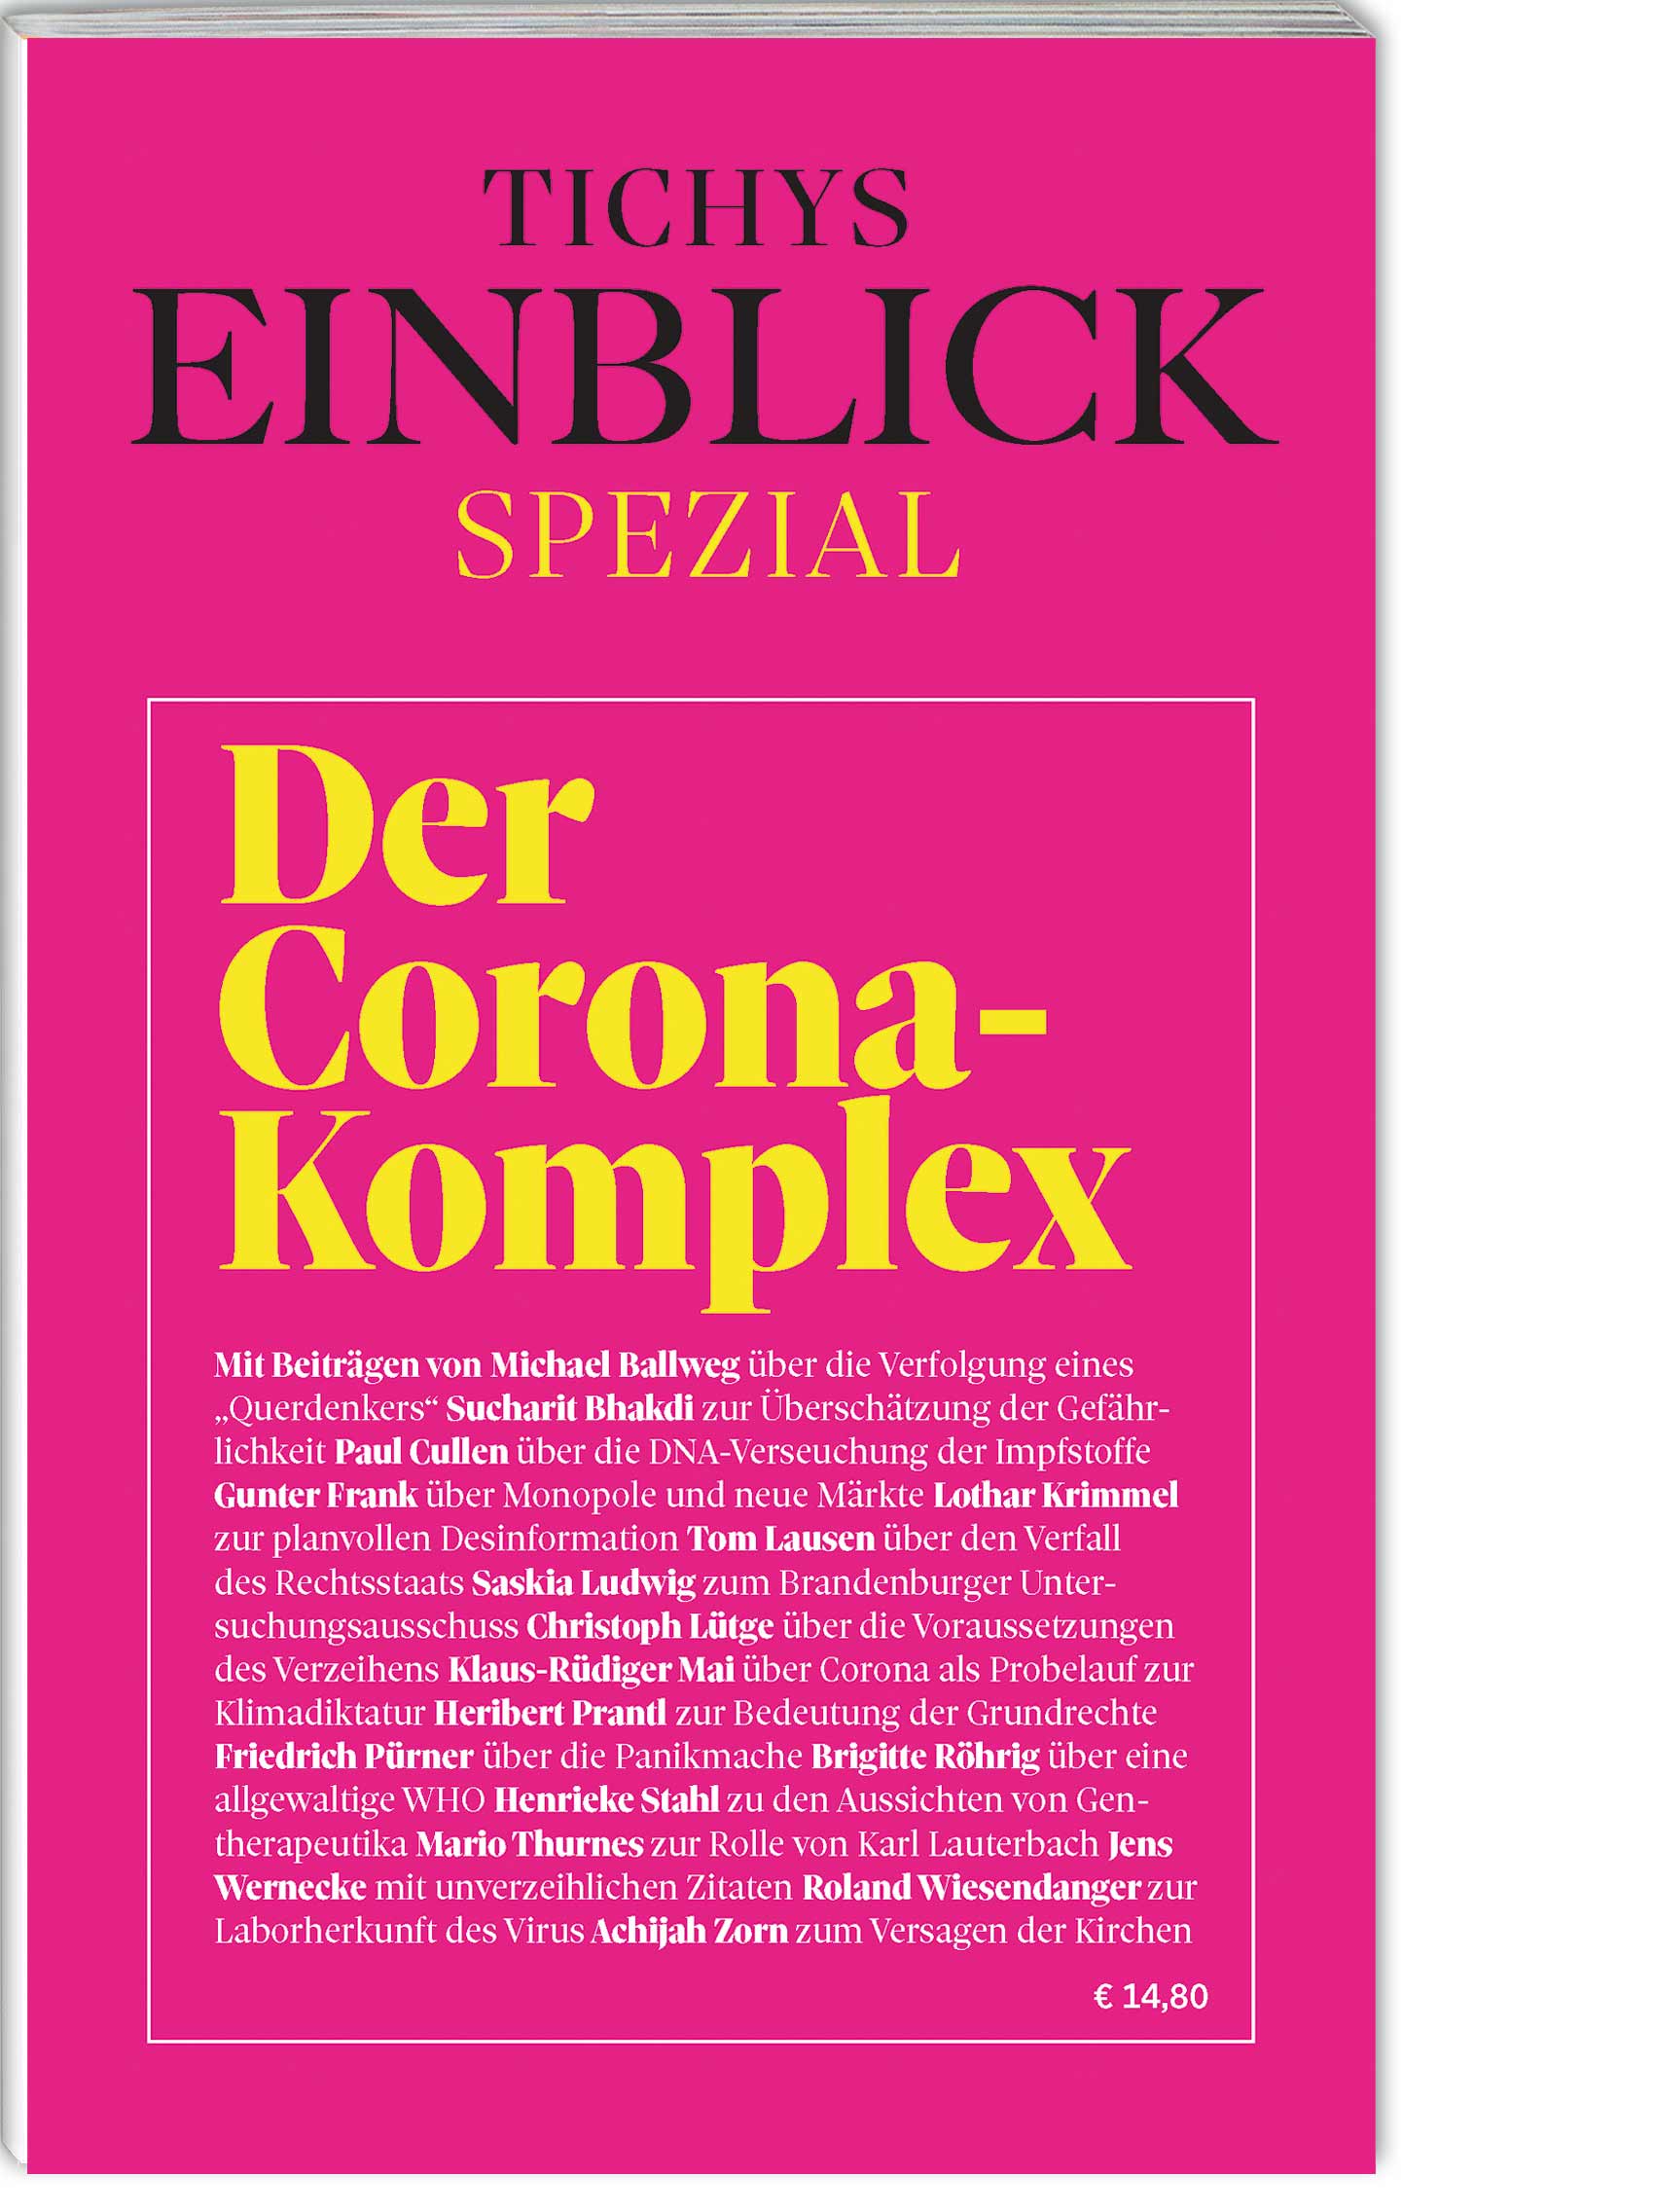 Tichys Einblick spezial "Der Corona Komplex" - print